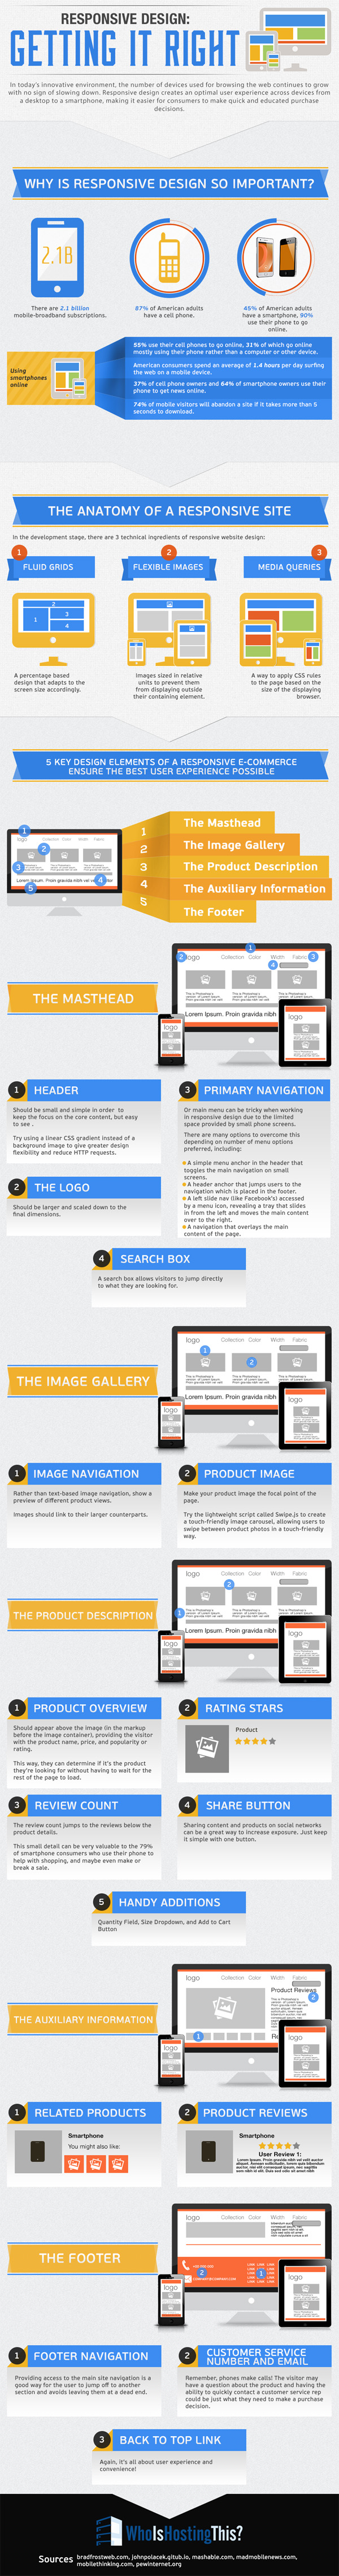 Responsive design : Infographic Inforamtion